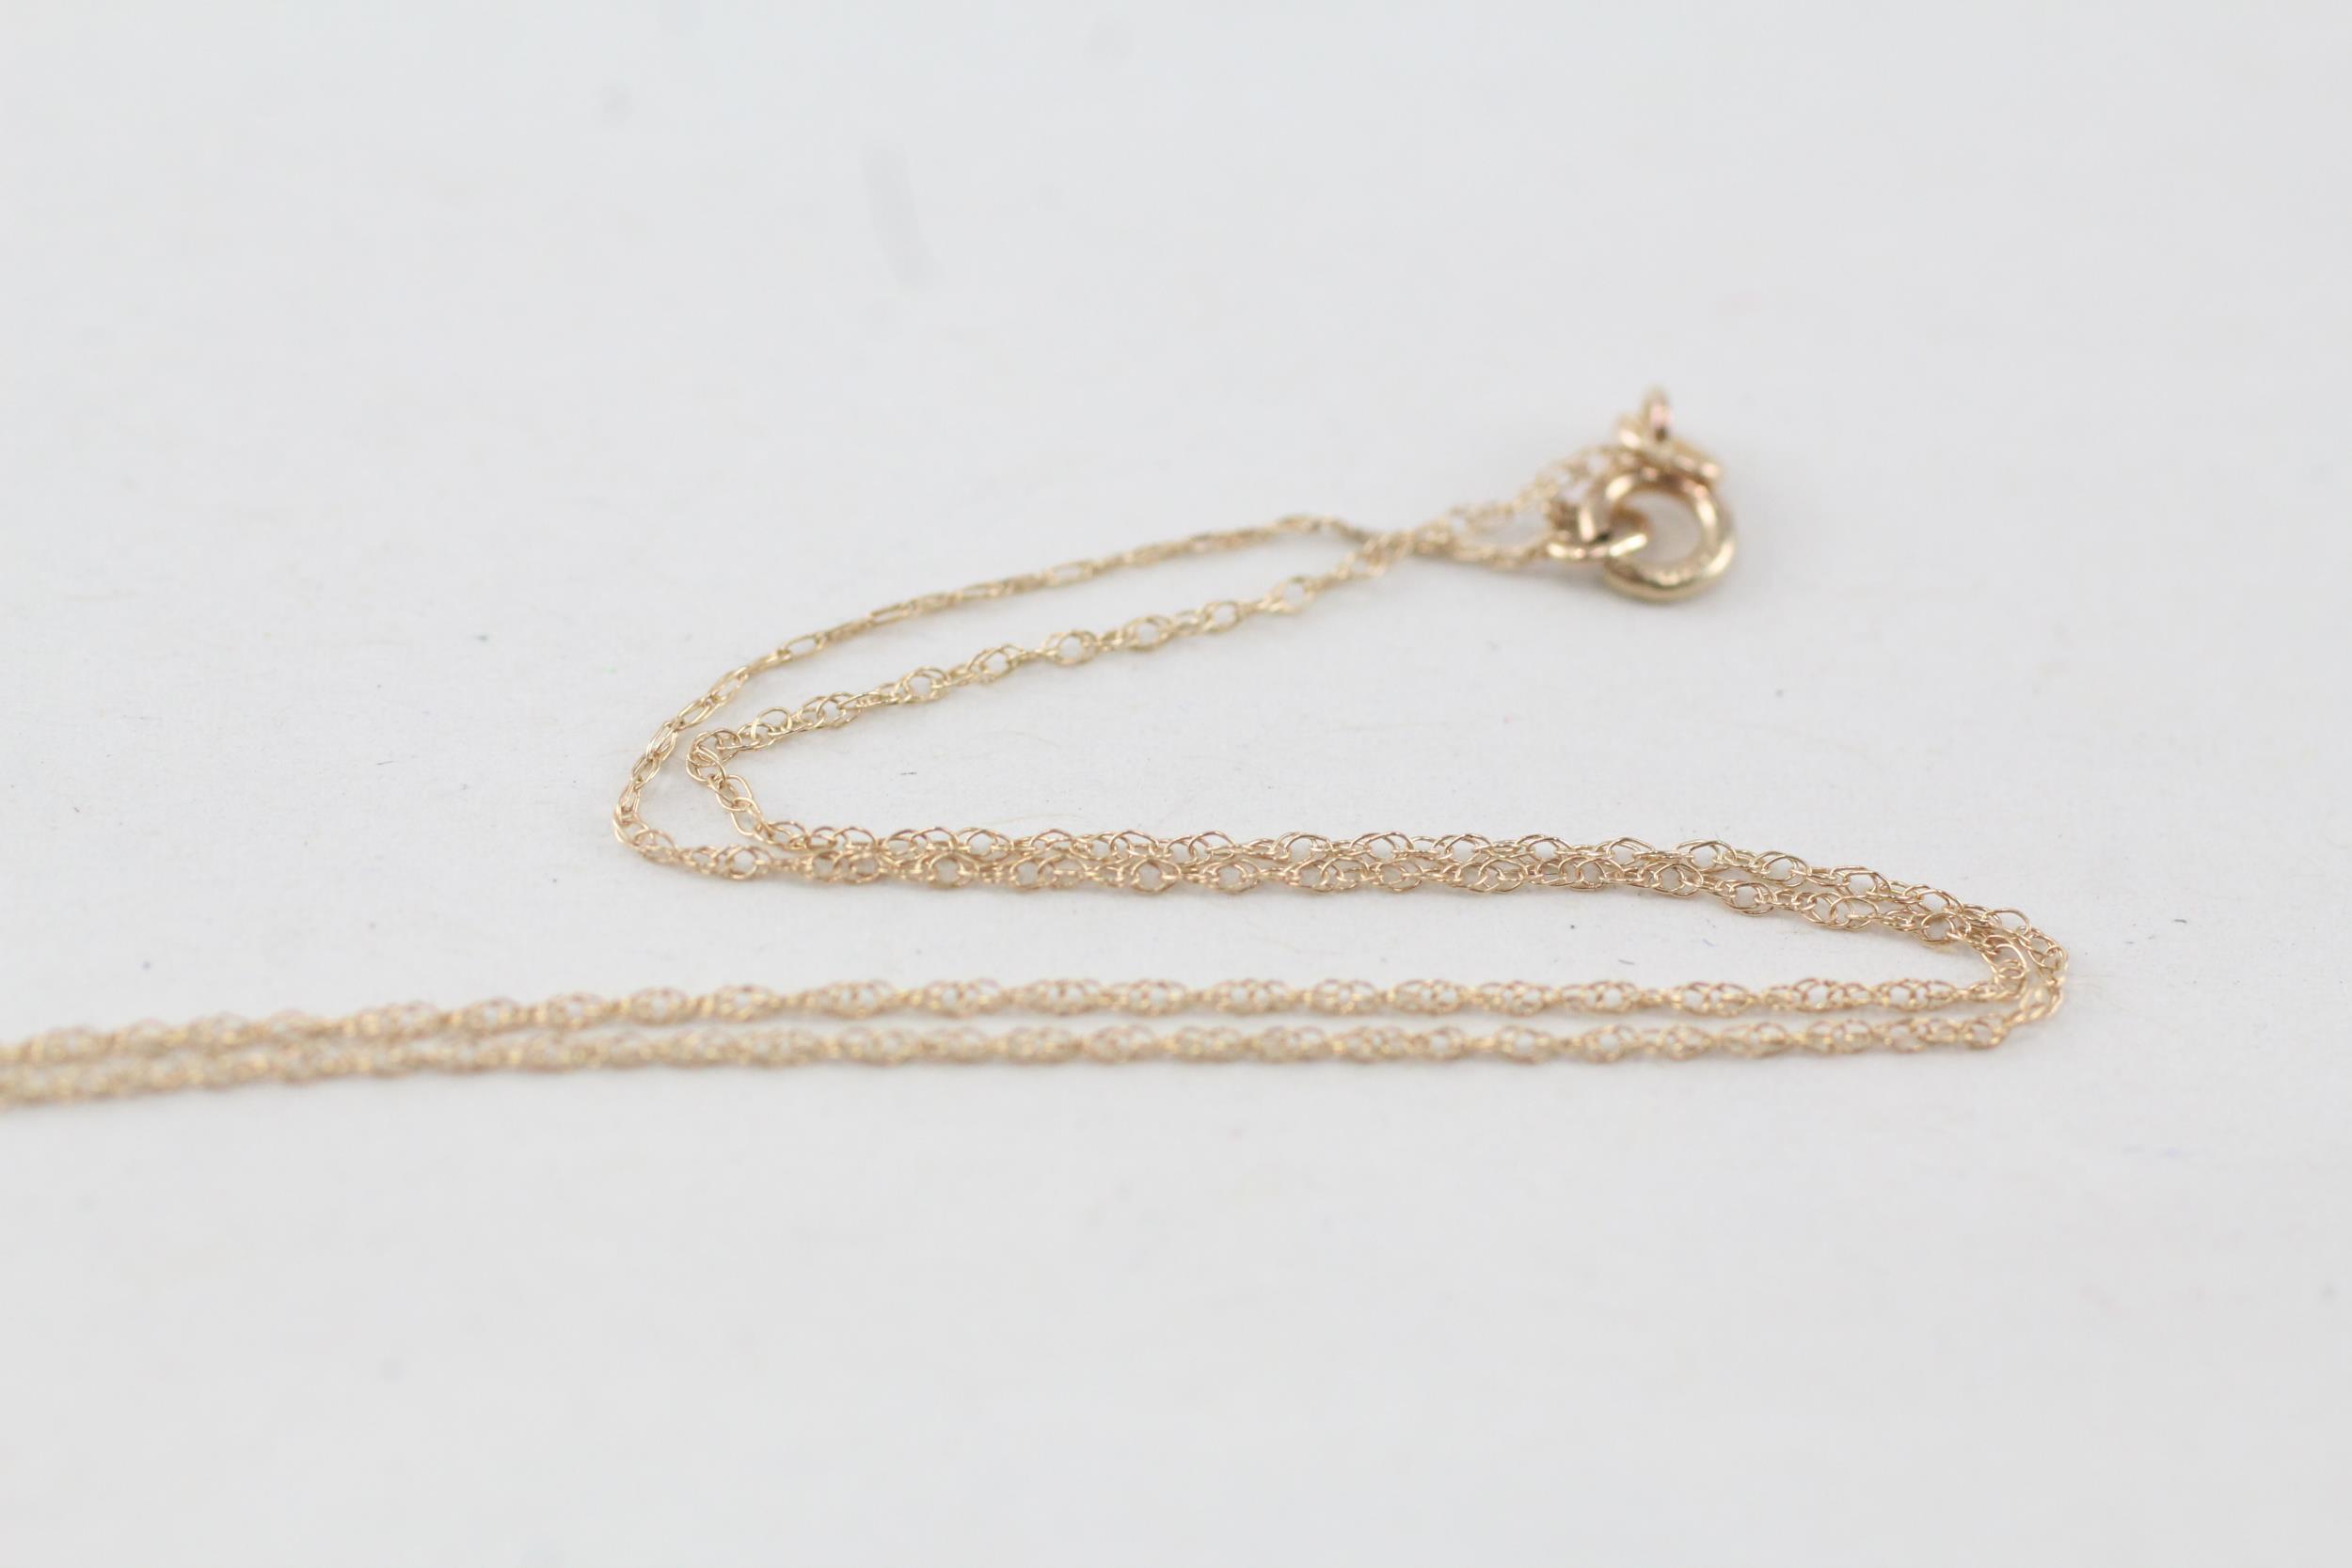 9ct gold round brilliant cut diamond set solitaire pendant necklace 0.5 g - Image 4 of 4